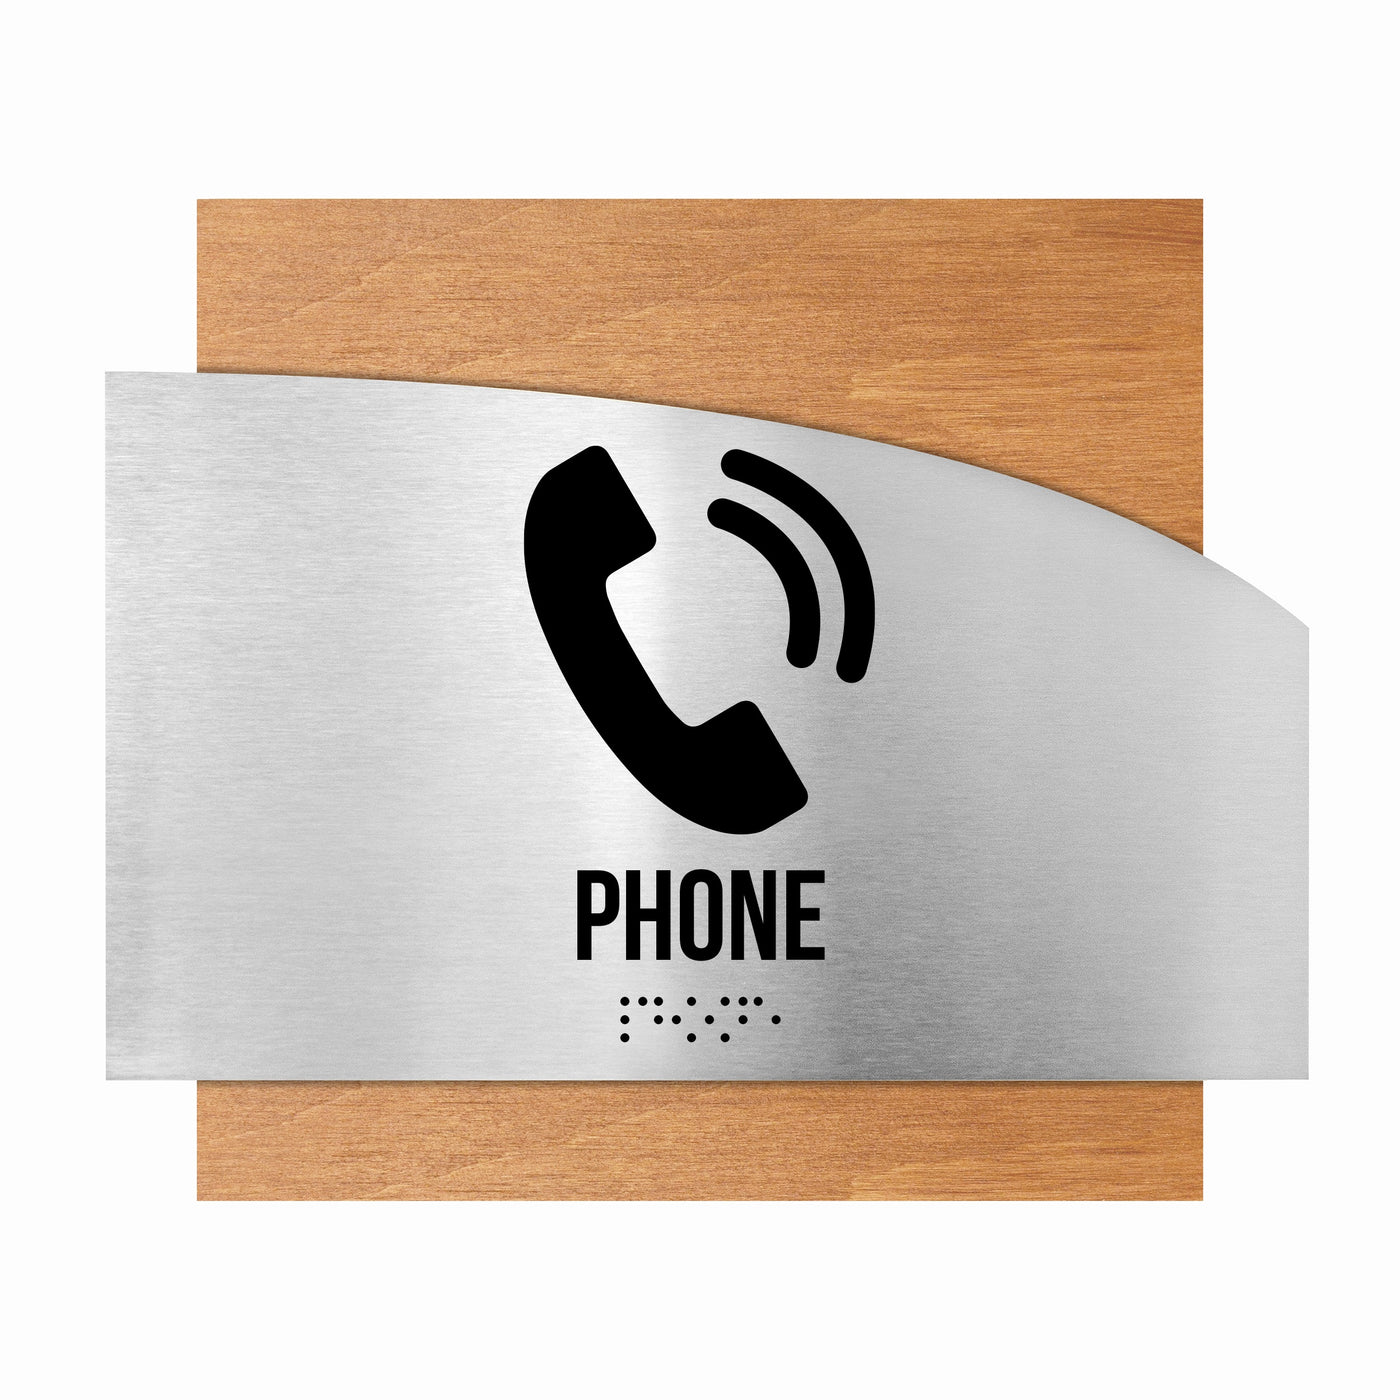 Door Signs - Phone Signs - Stainless Steel & Wood Plate - "Wave" Design